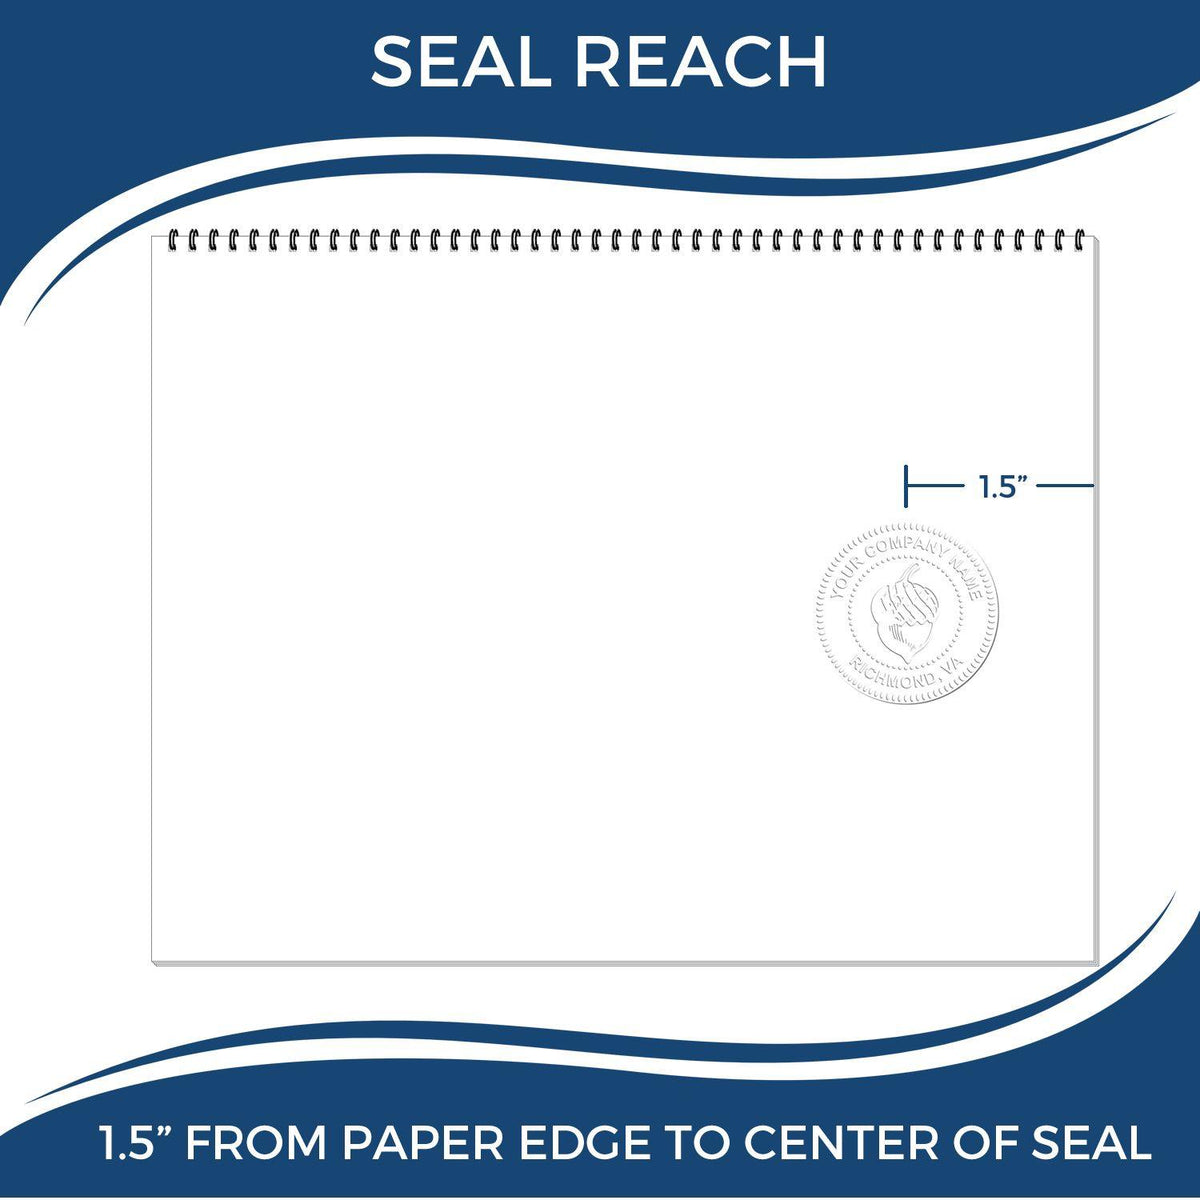 Interior Designer Pink Soft Seal Embosser - Engineer Seal Stamps - Embosser Type_Handheld, Embosser Type_Soft Seal, Type of Use_Professional